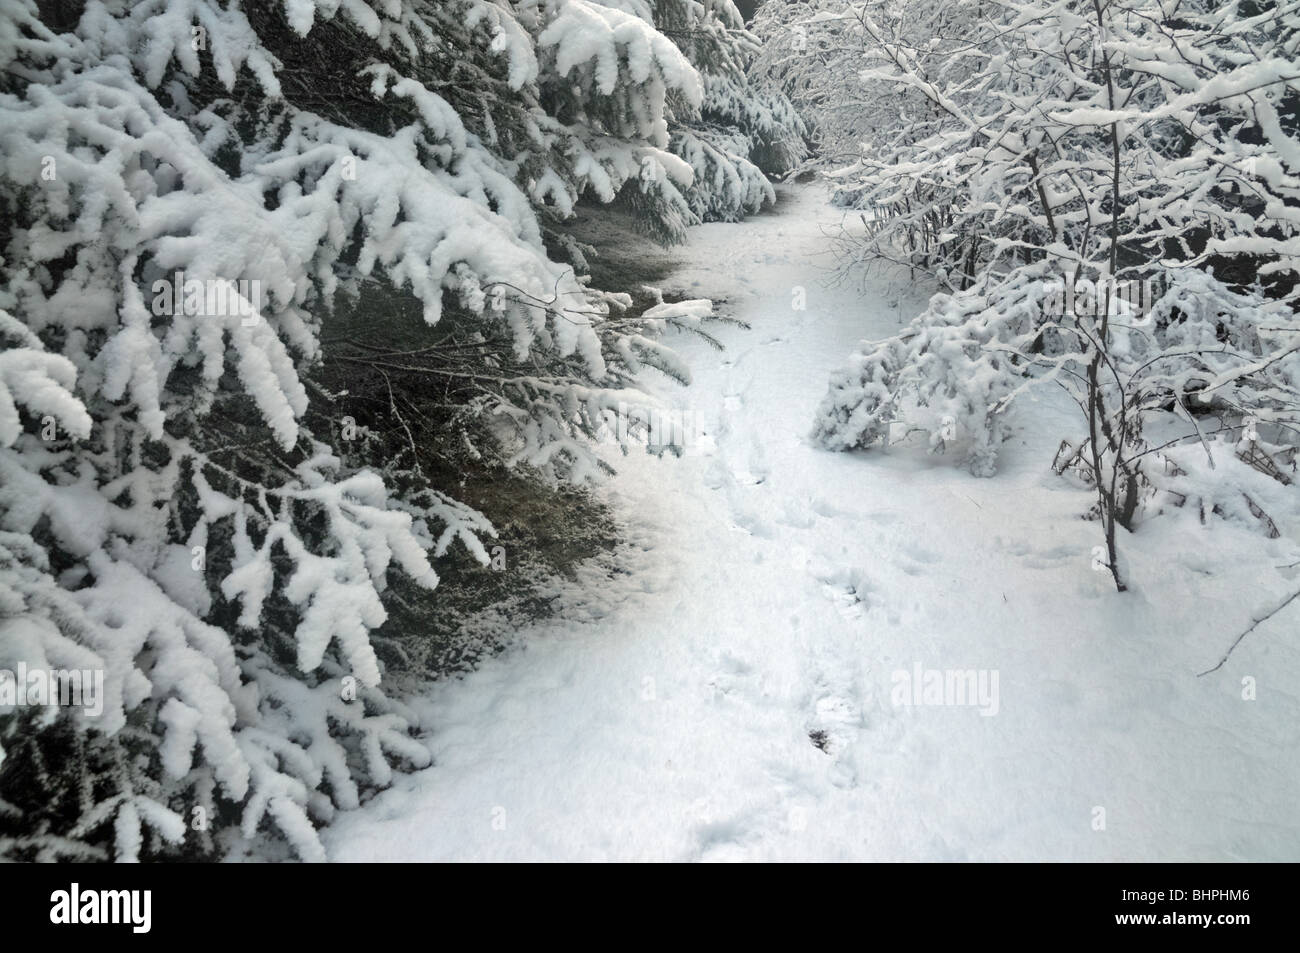 A snowy winter scene of a track through snow laden  fir trees. Stock Photo